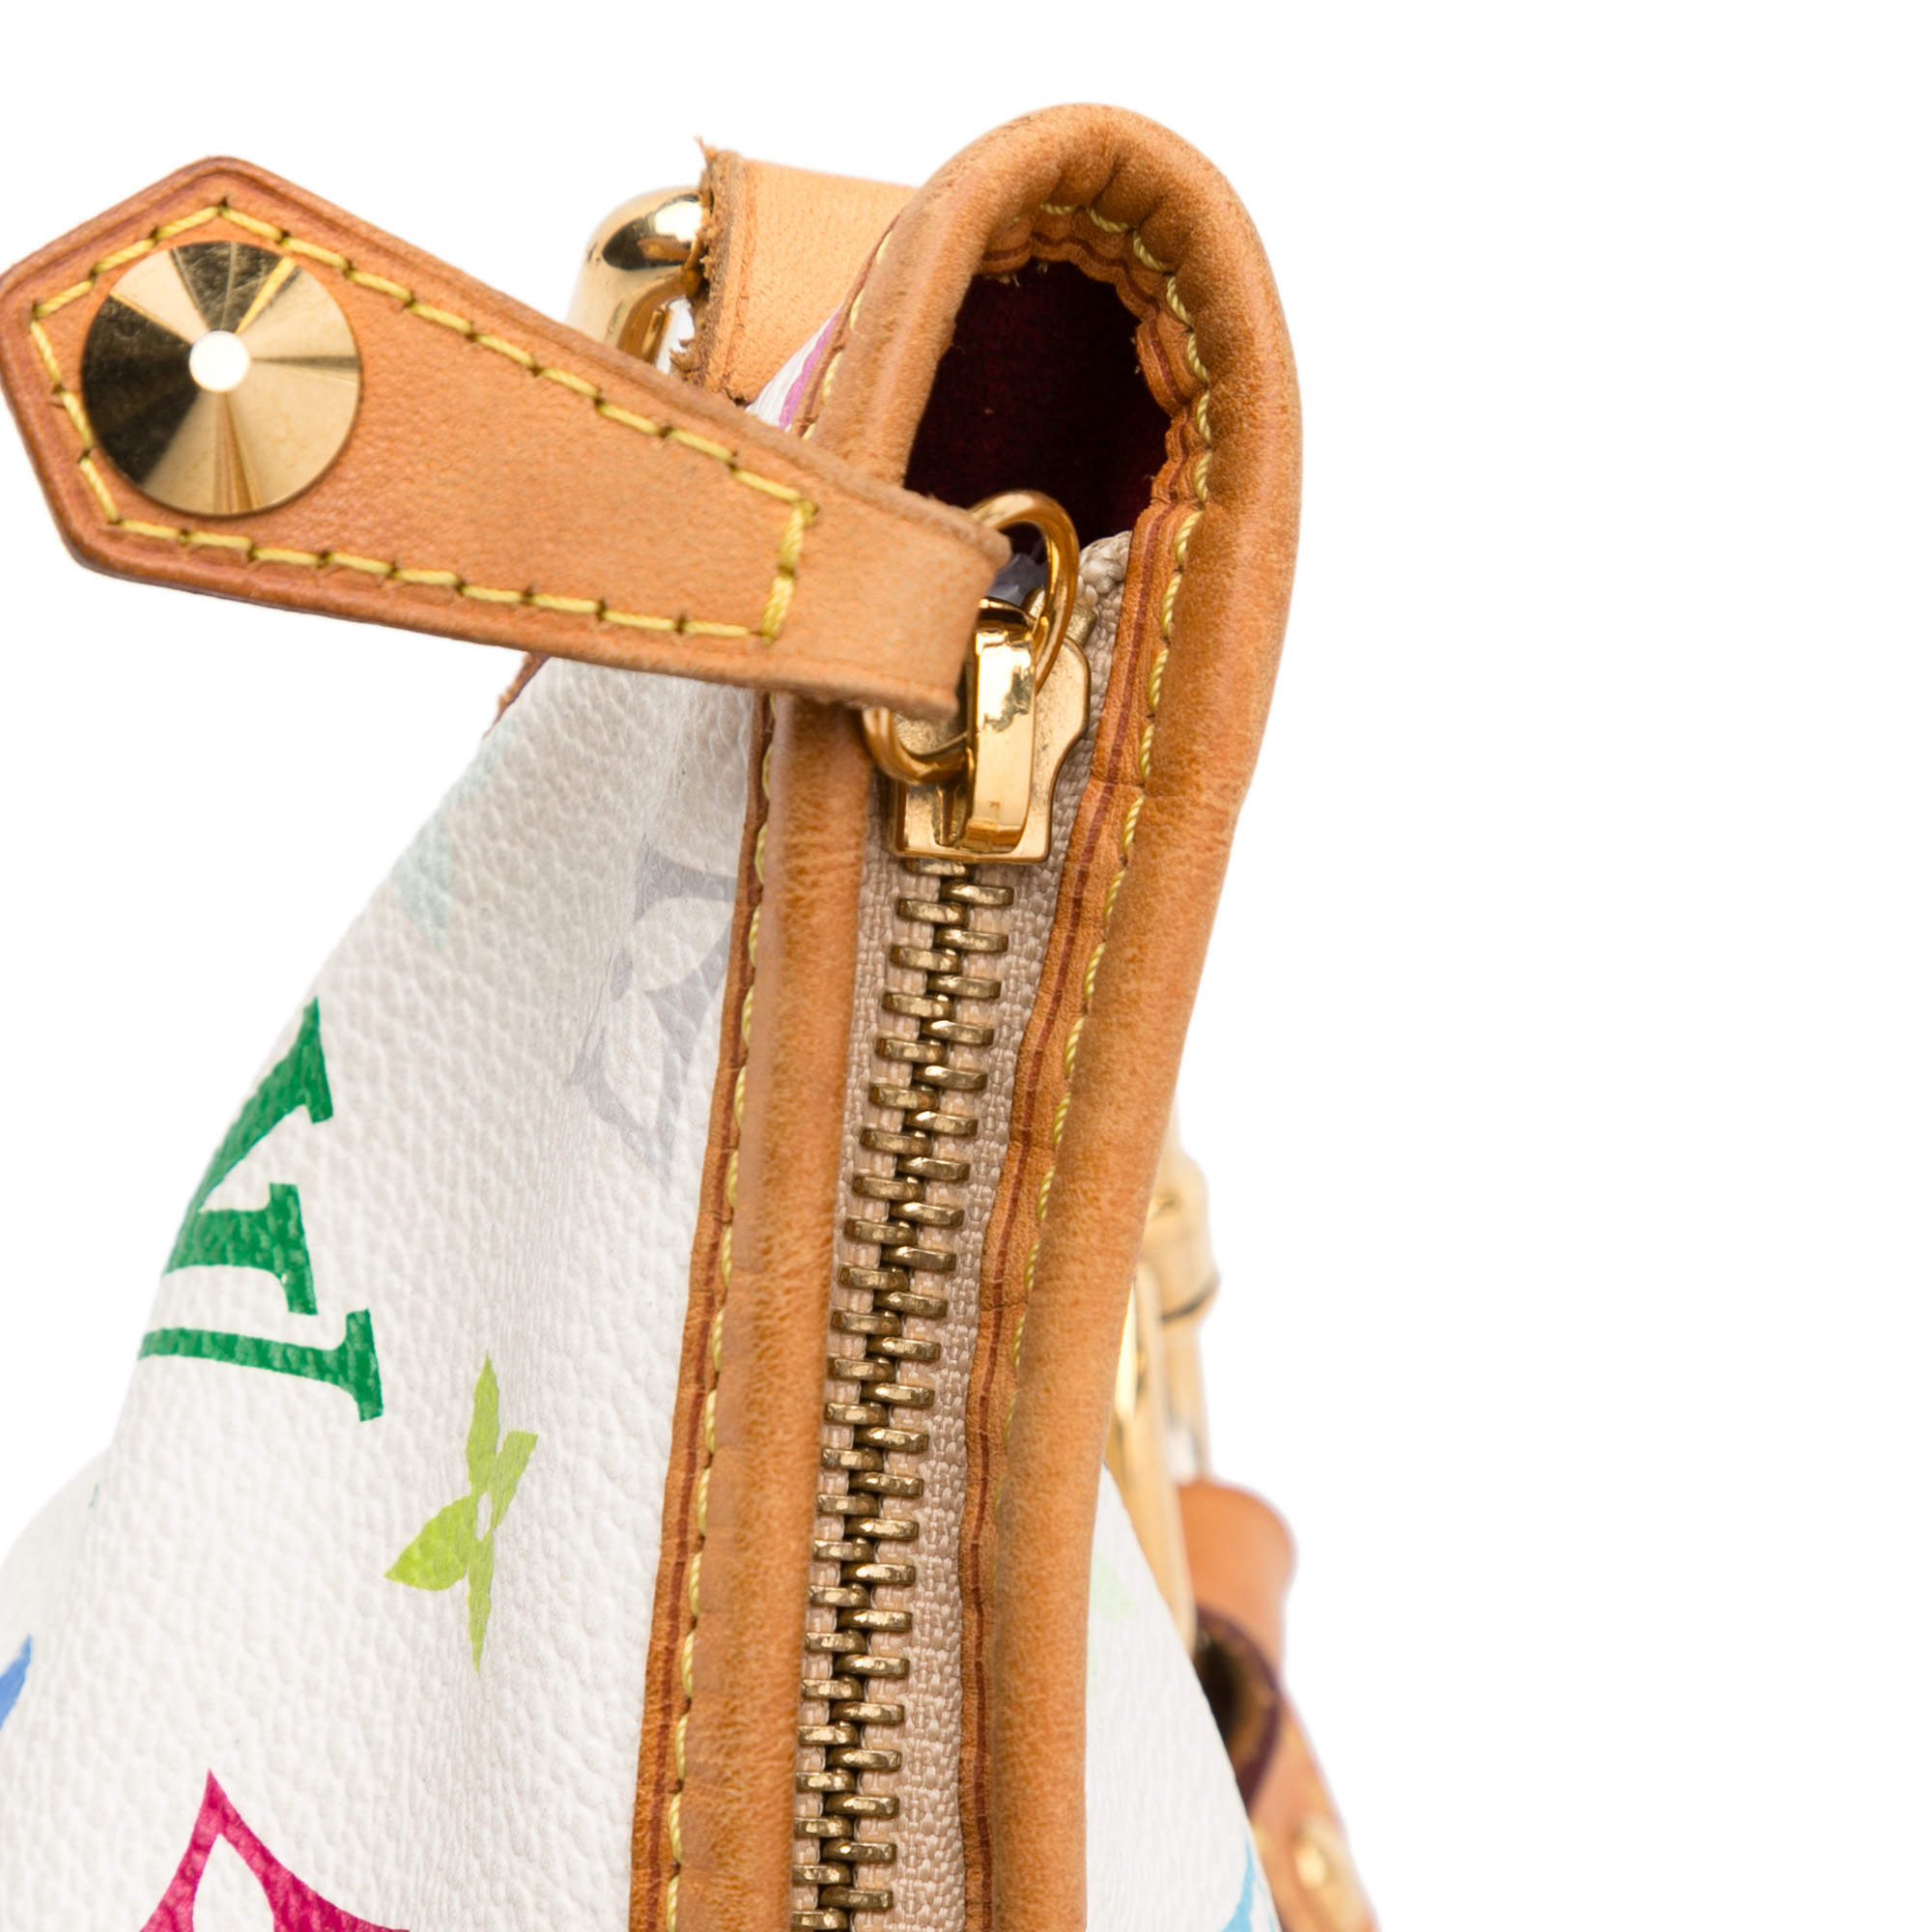 Louis Vuitton Chrissie Handbag Monogram Multicolor White